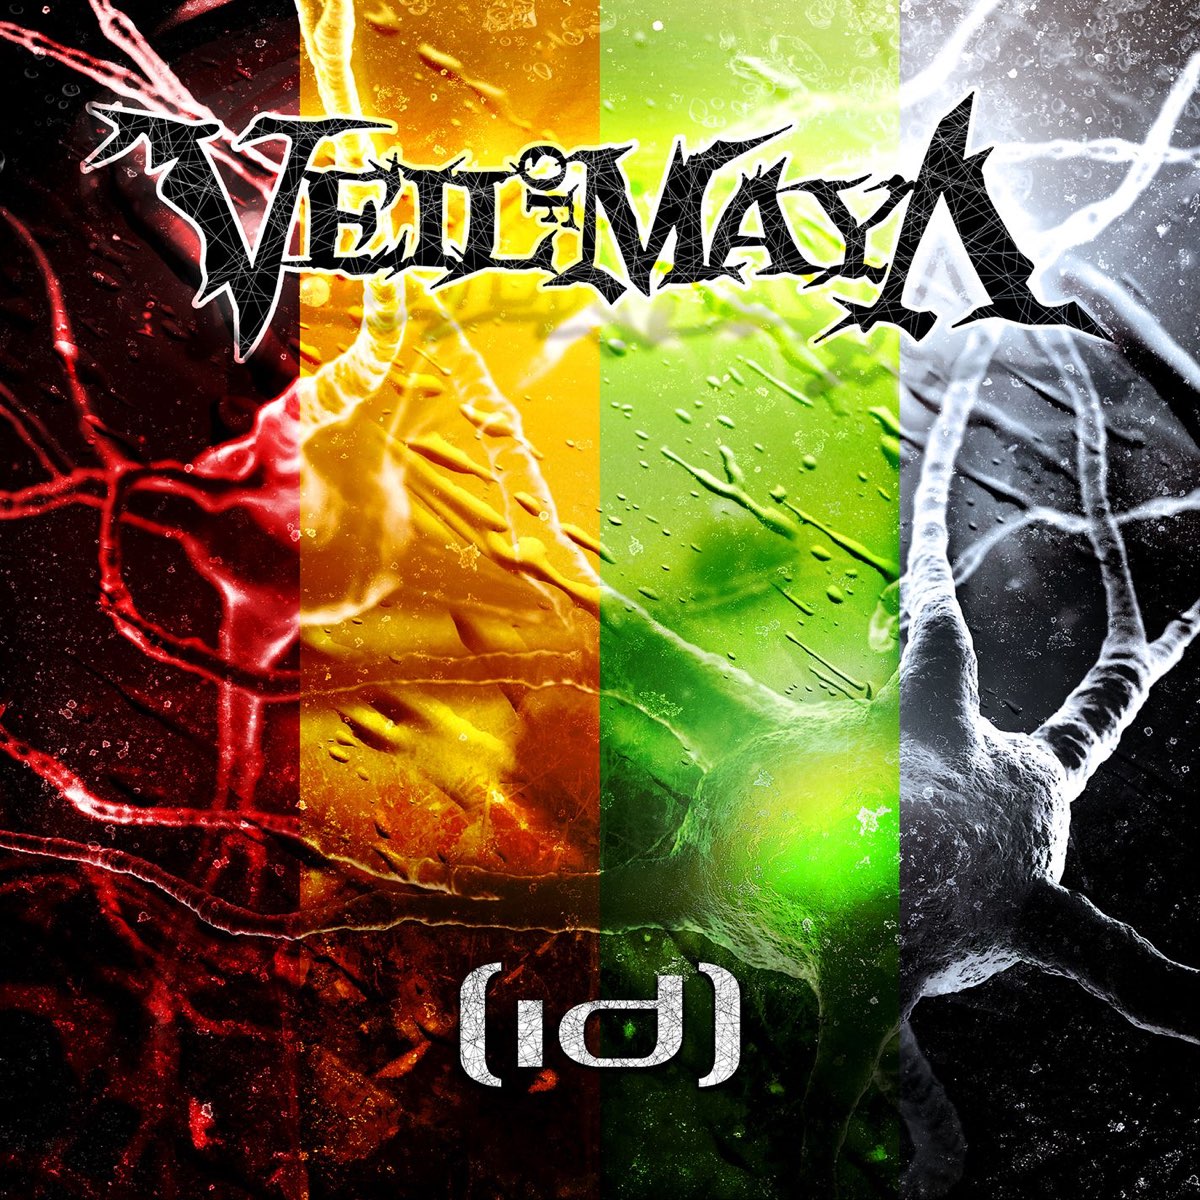 Id] by Veil of Maya on Apple Music